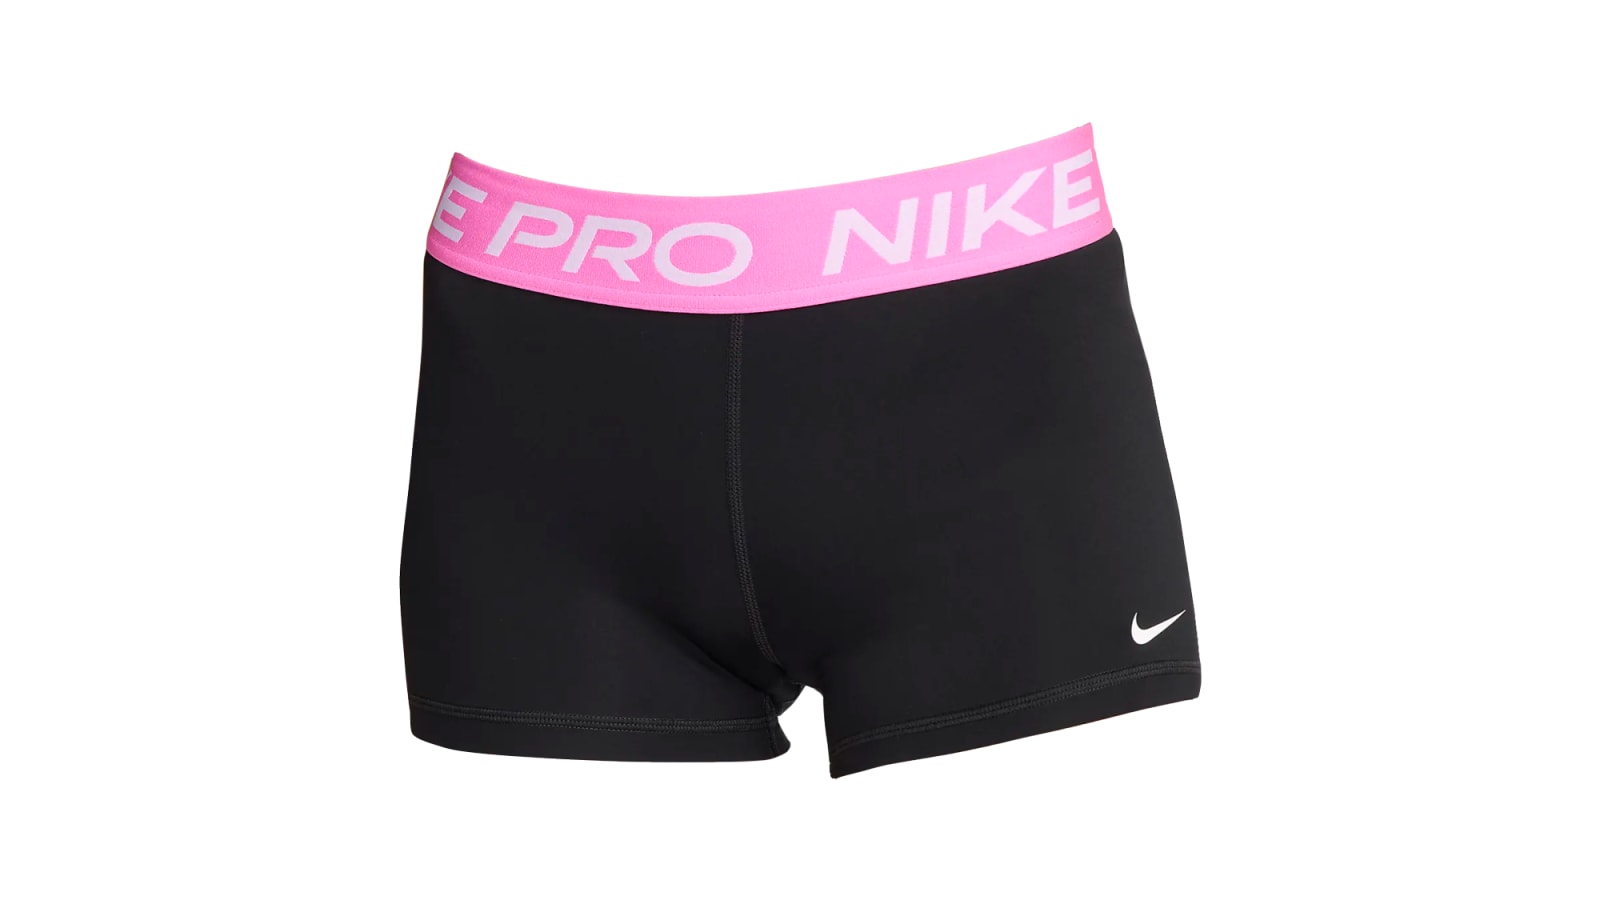 Kid's Nike Pro Core Compression Slider Shorts - Black